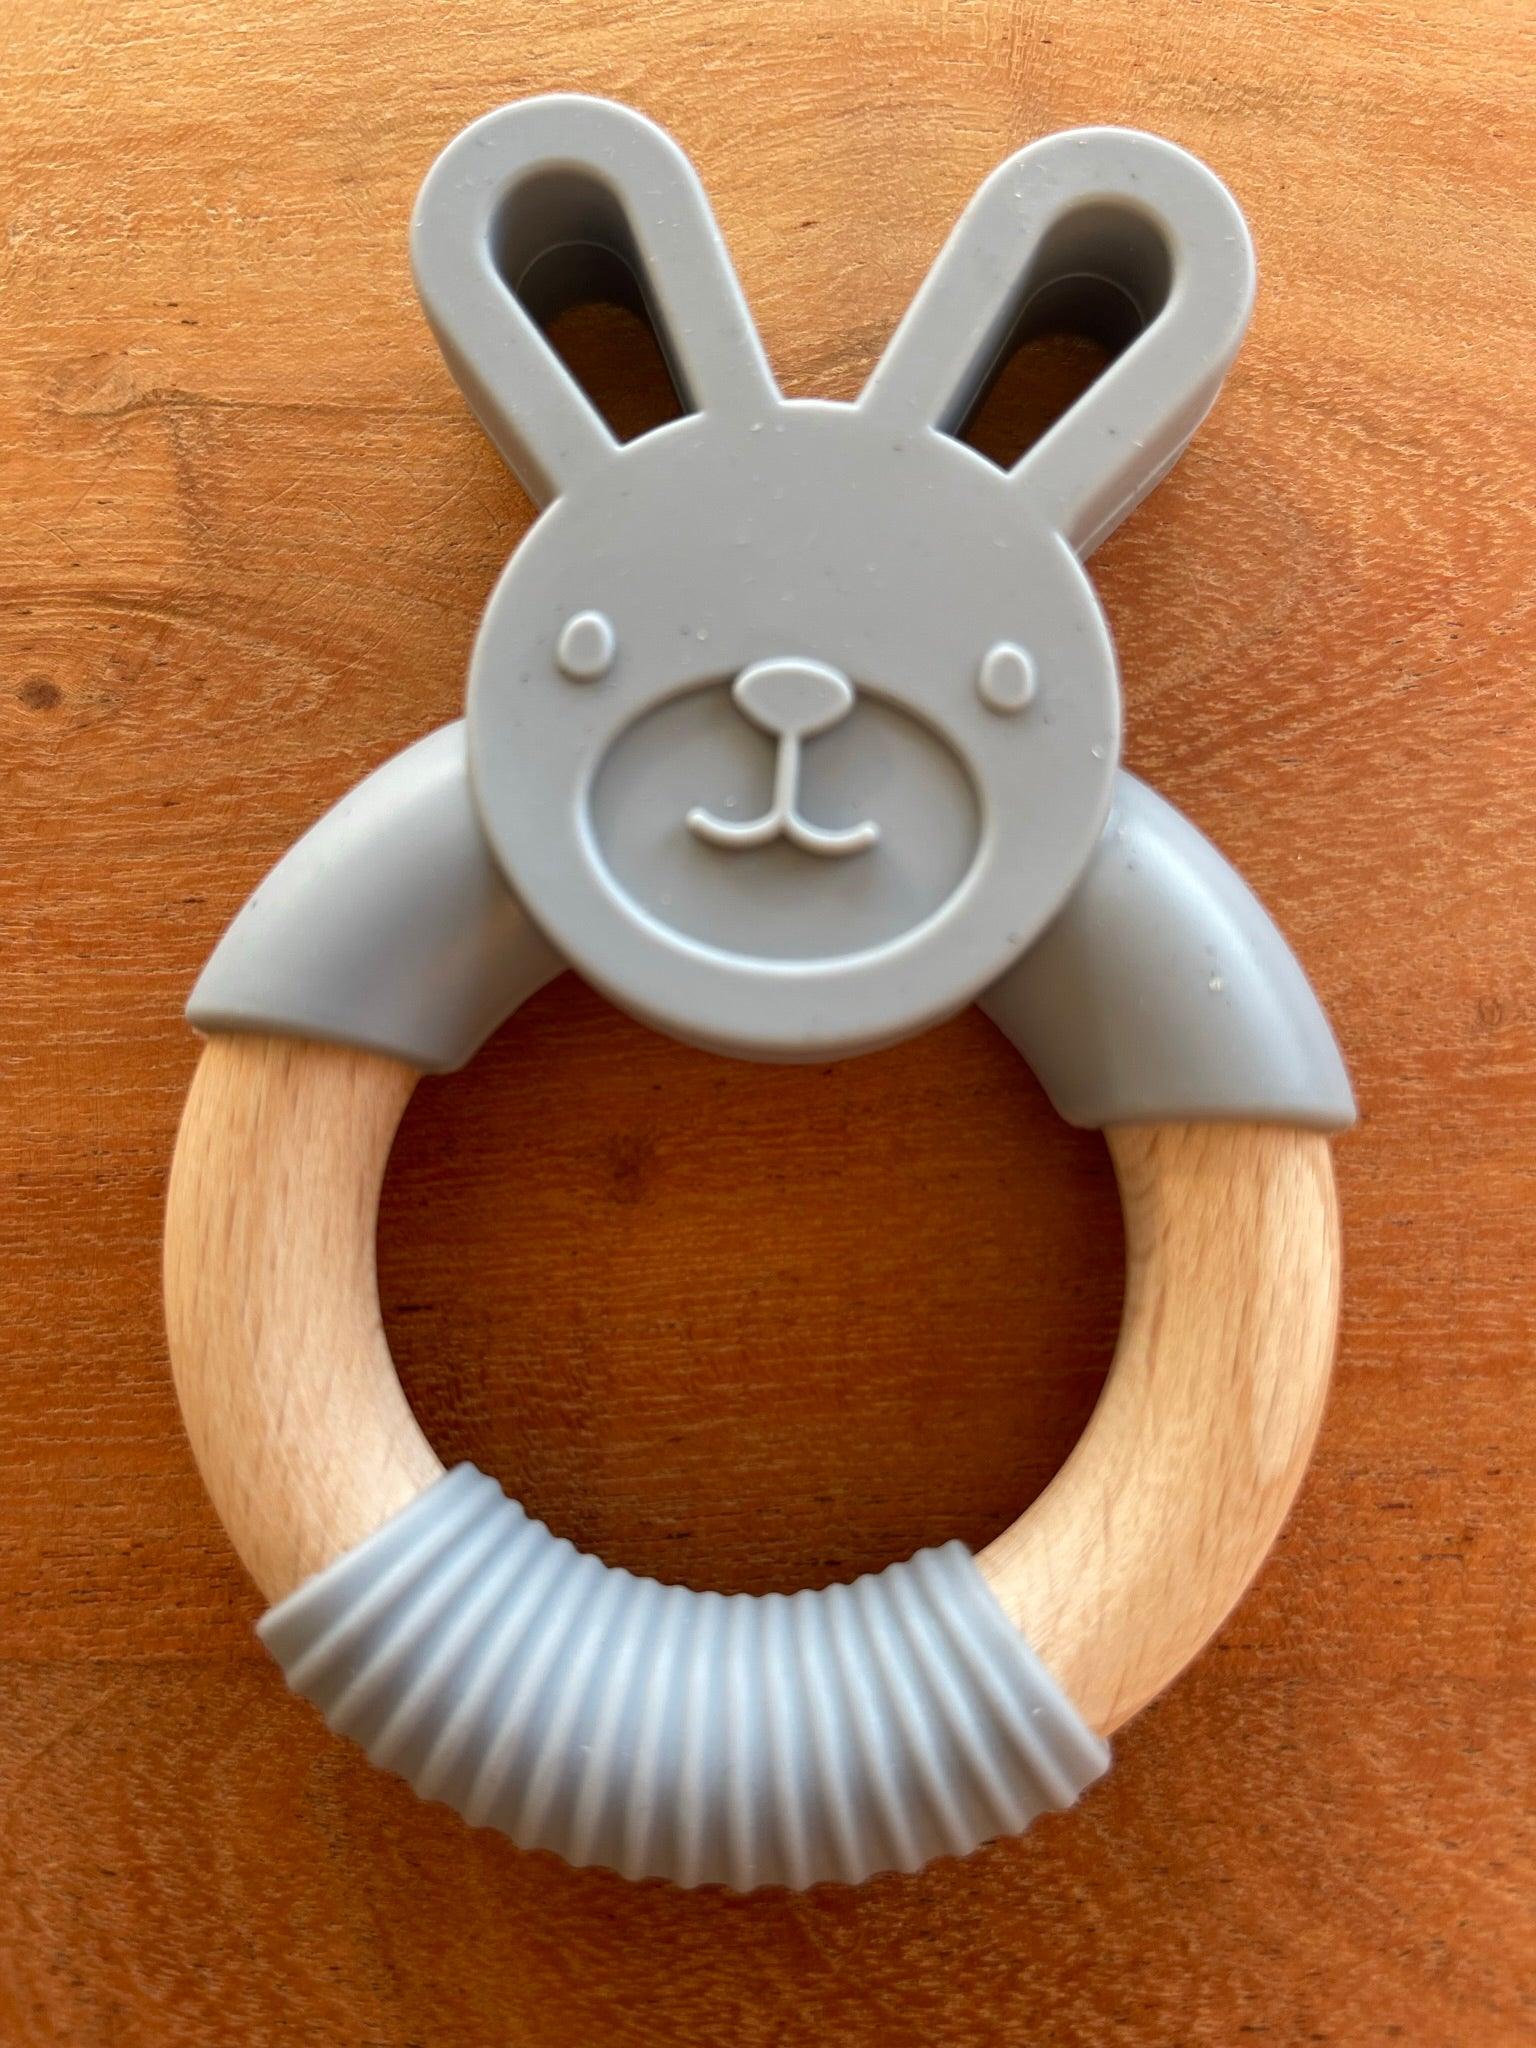 Yoho Baby & co. Silicone Teething Ring - cute rabbit, grey